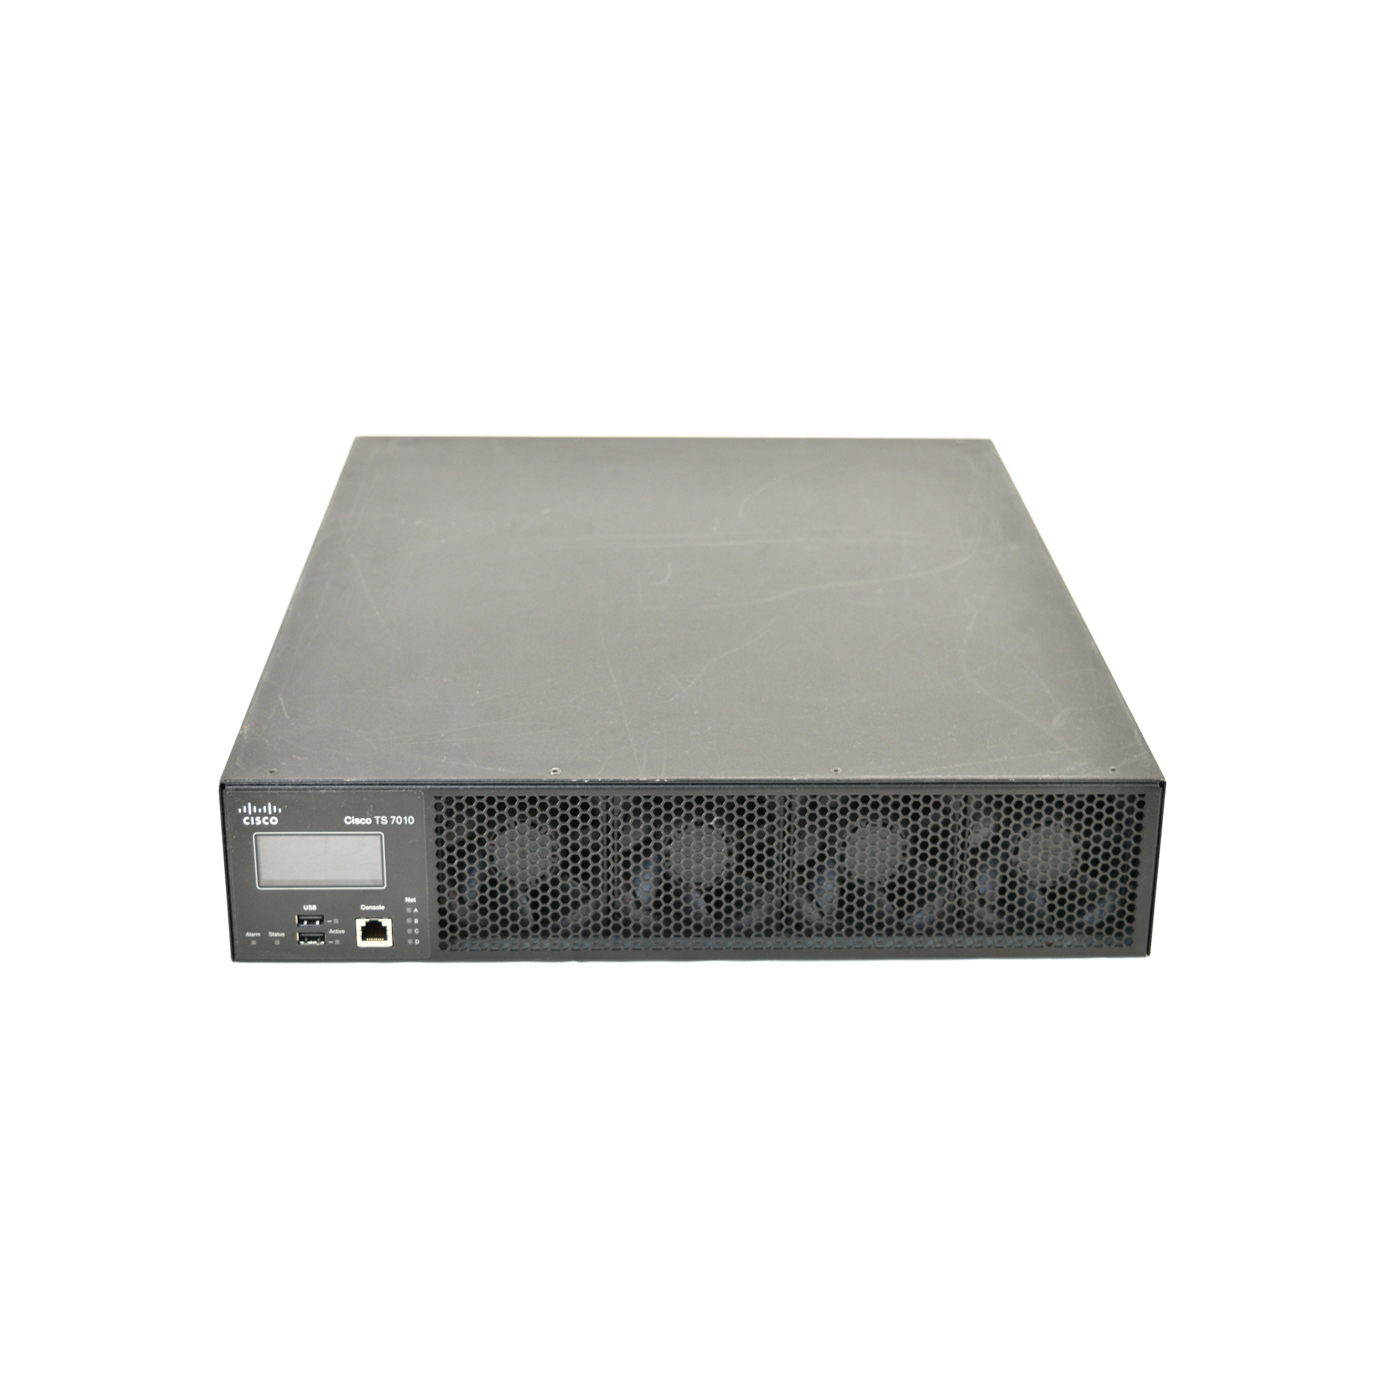 TelePresence Server on Multiparty Media 310 